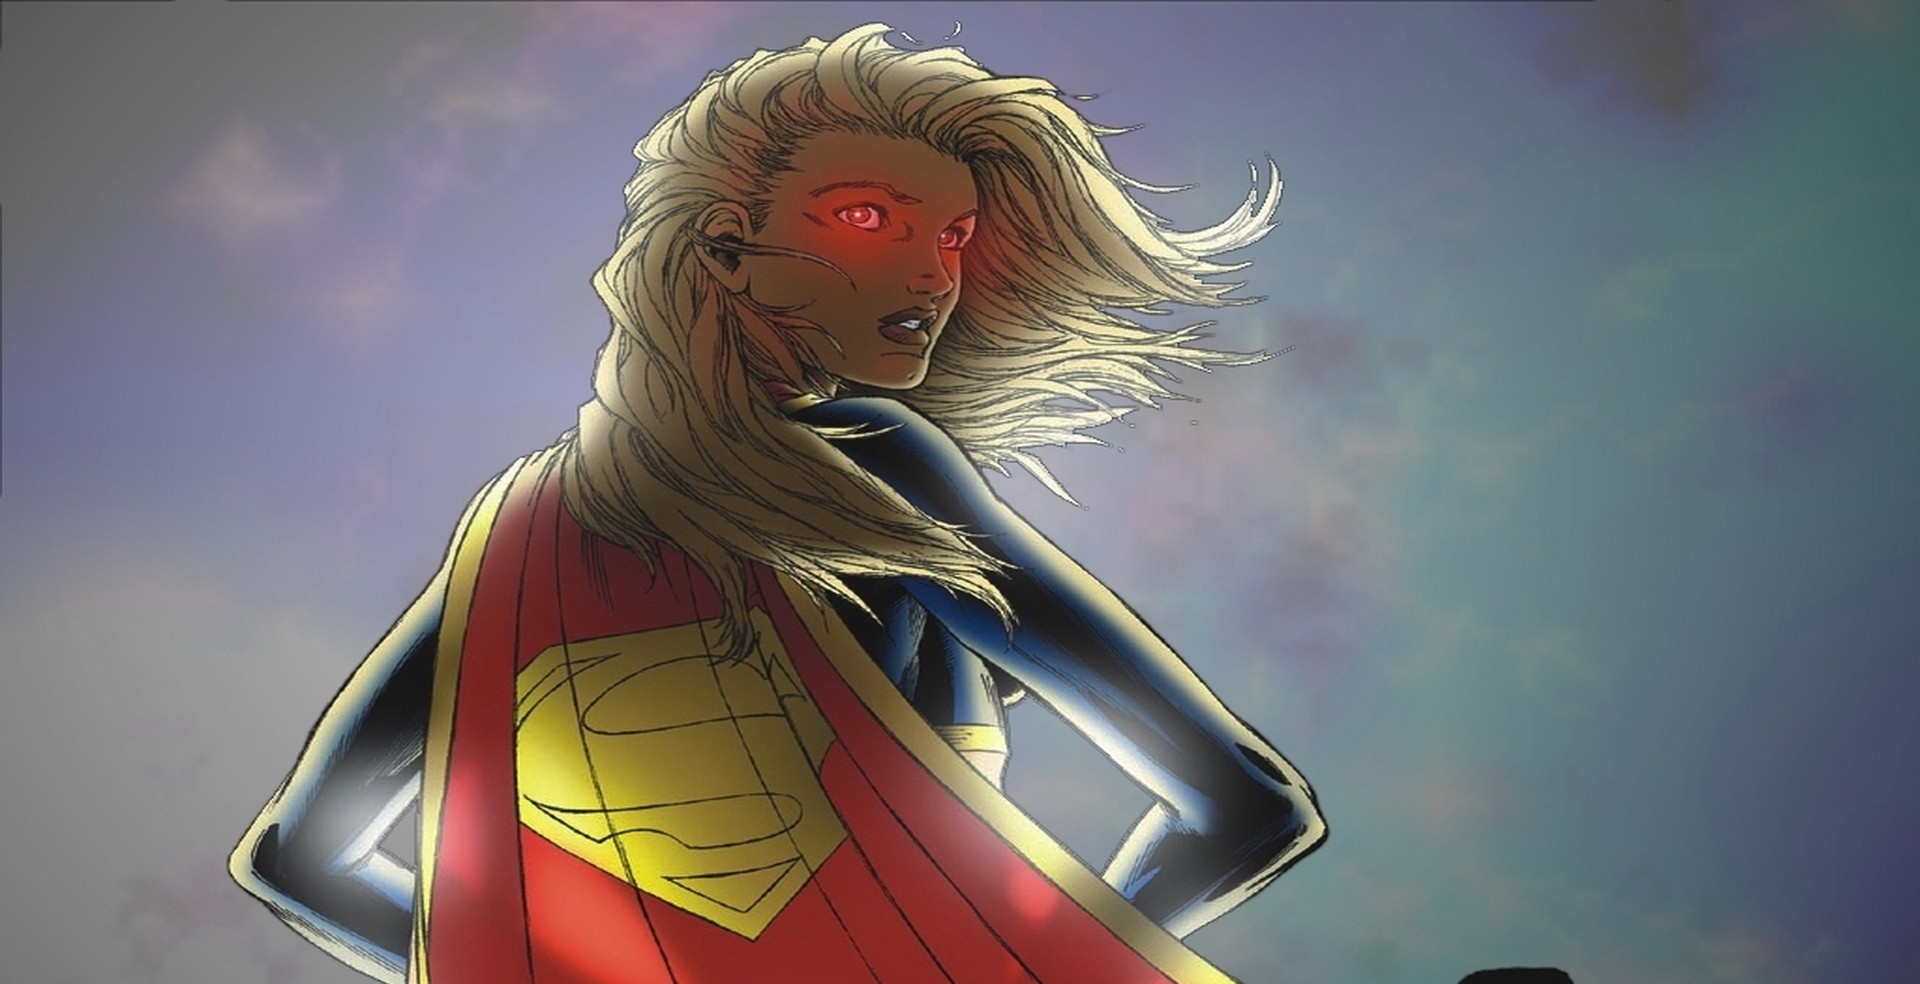 General 1920x984 Supergirl DC Comics superhero superheroines cape glowing eyes blonde long hair